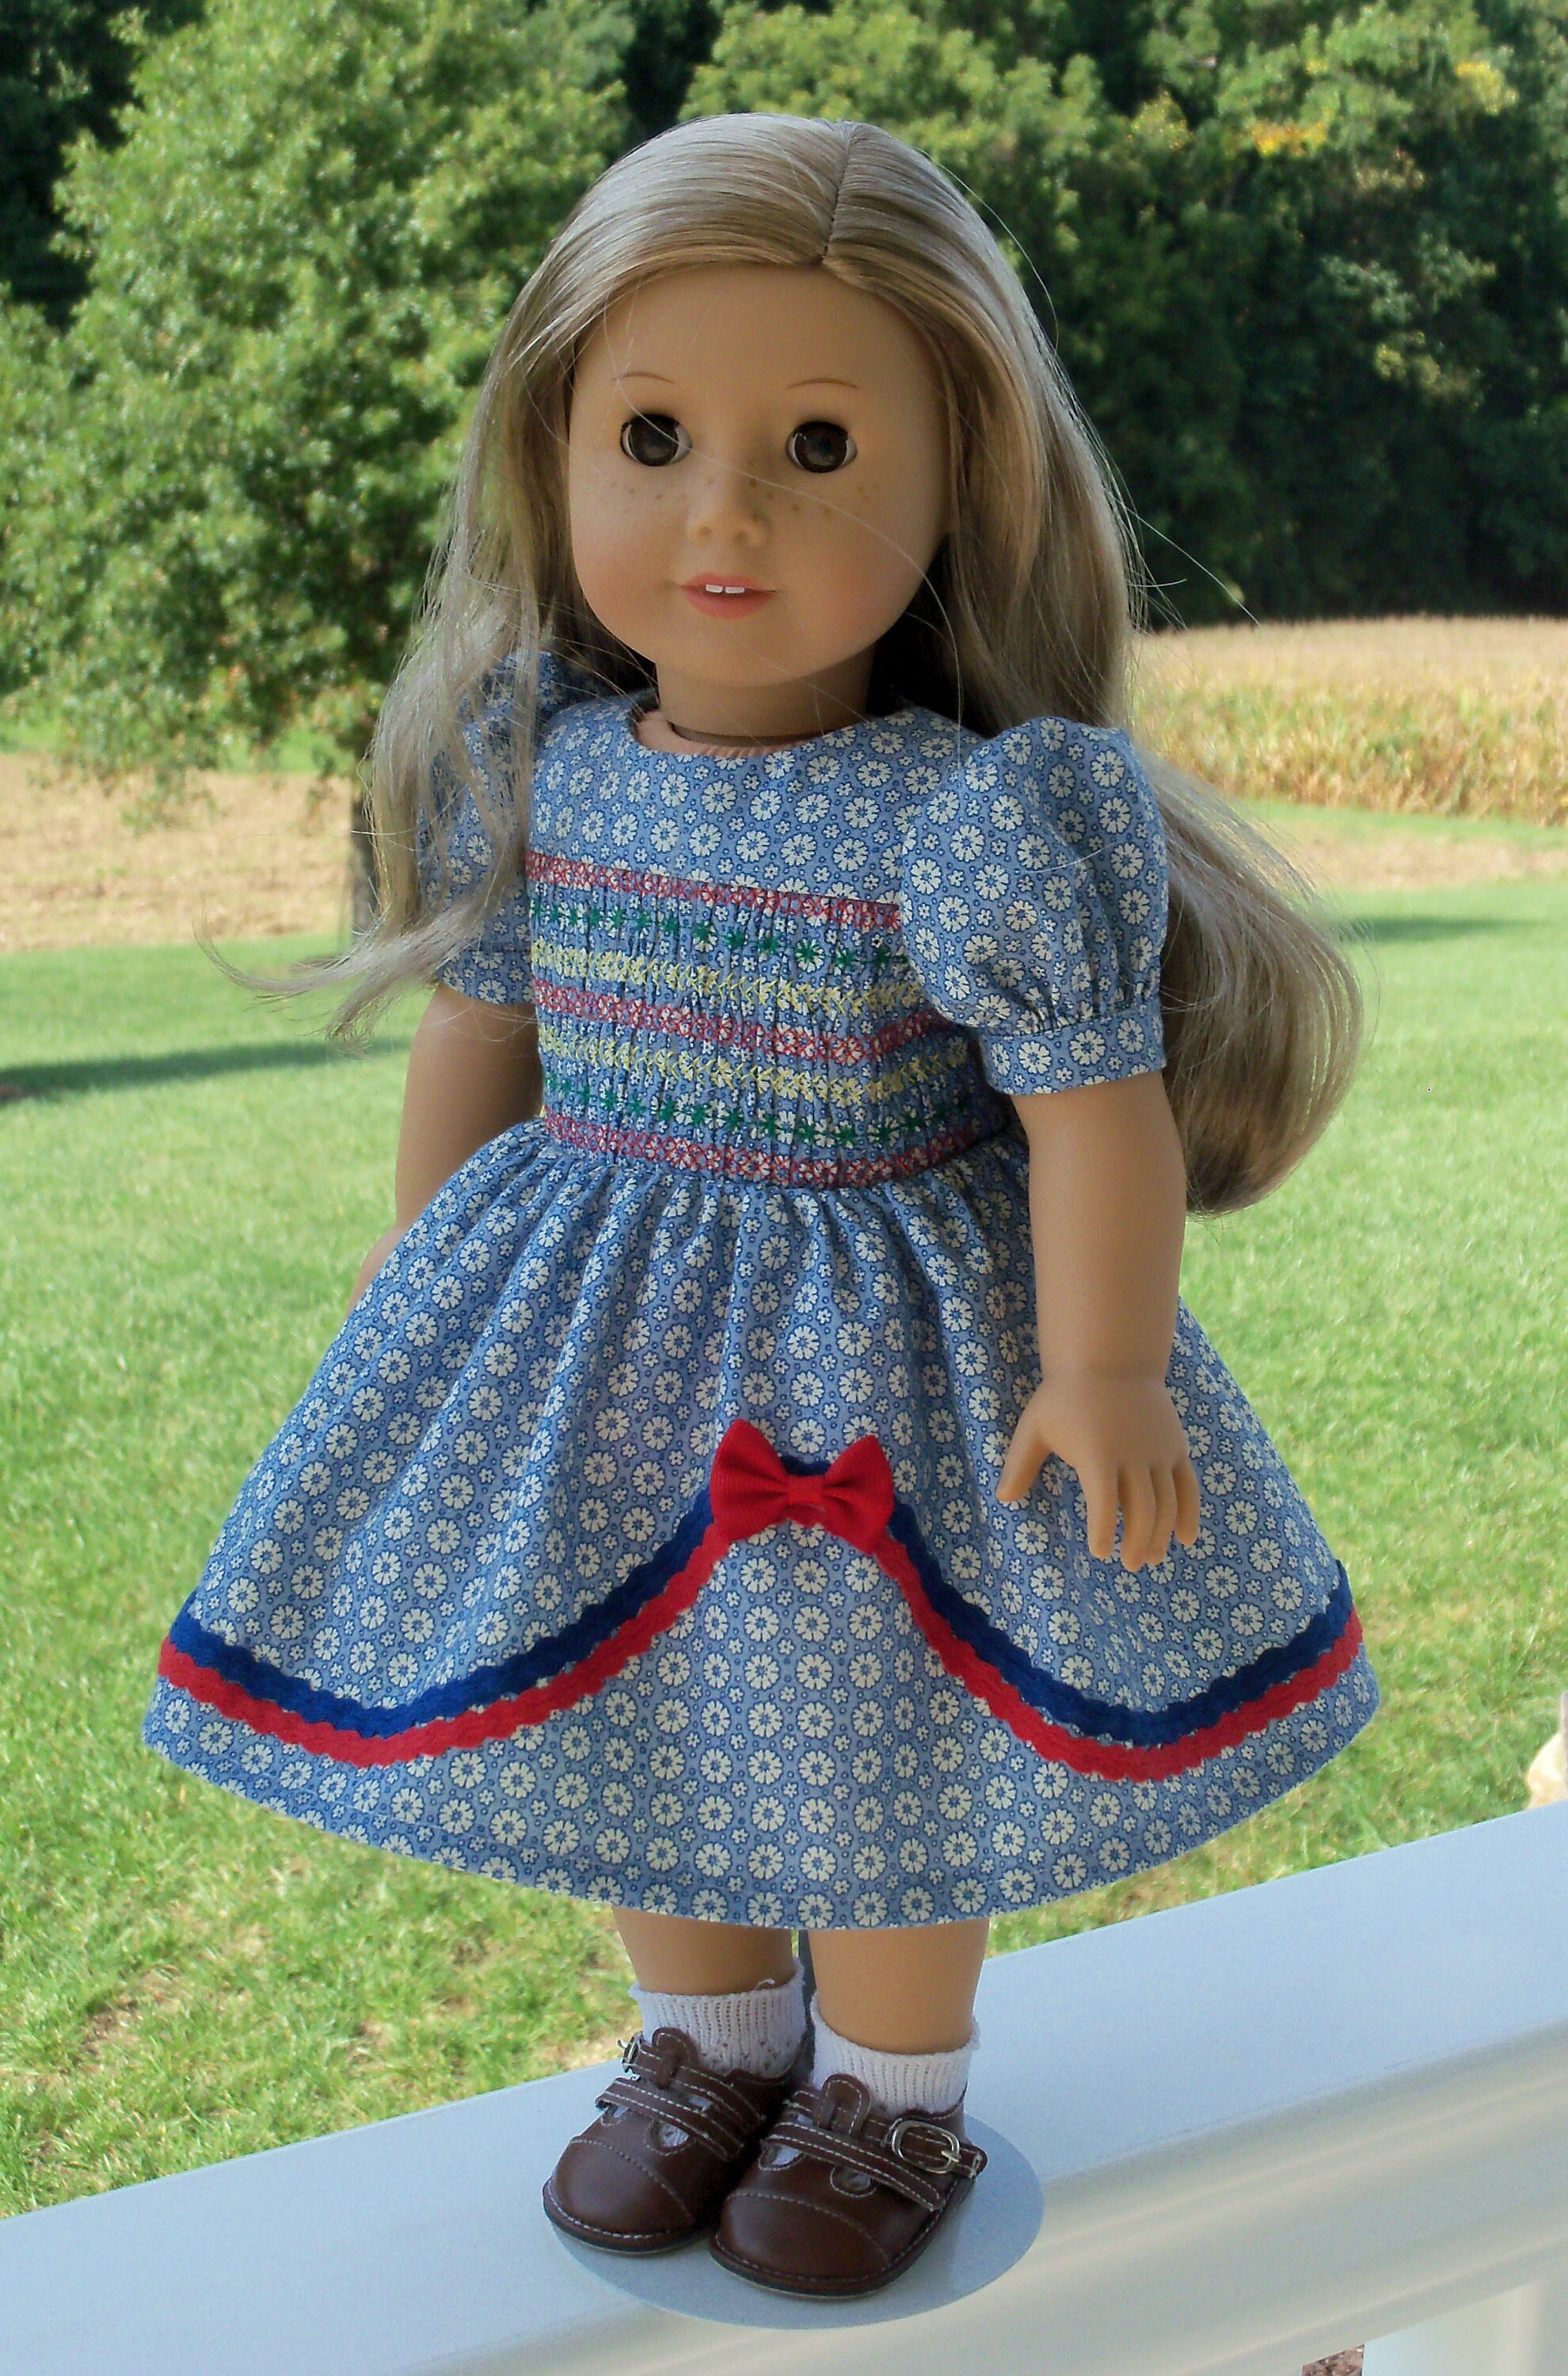 18 American Girl Size PDF Sewing Pattern: Sweet and SIMPLE SMOCKING  /pattern Fits 18 American Girl ® Dolls 